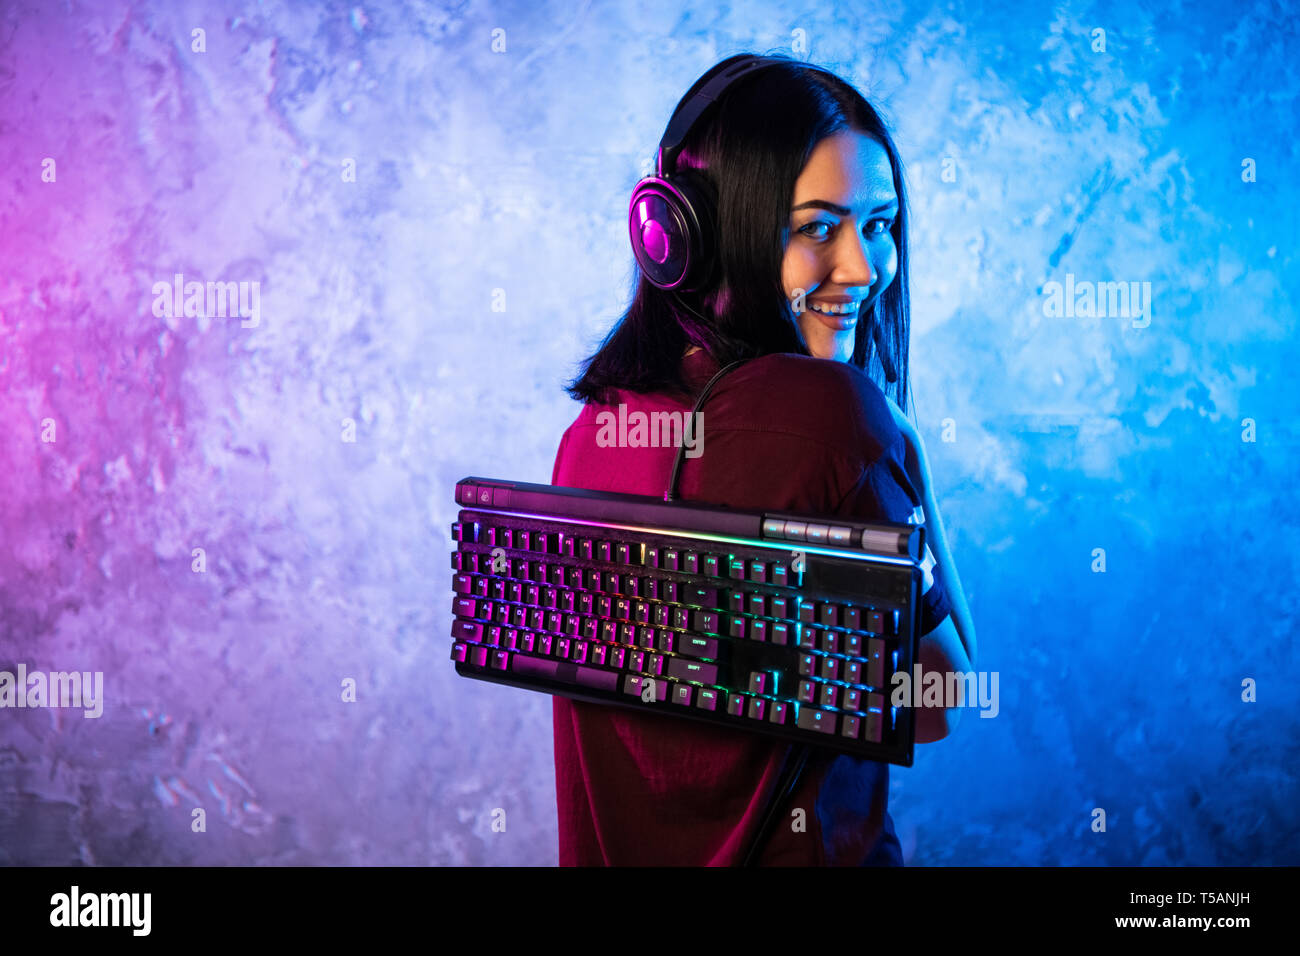 Funny nerd gamer girl posing with gaming keyboard, playing computer games  Stock Photo - Alamy